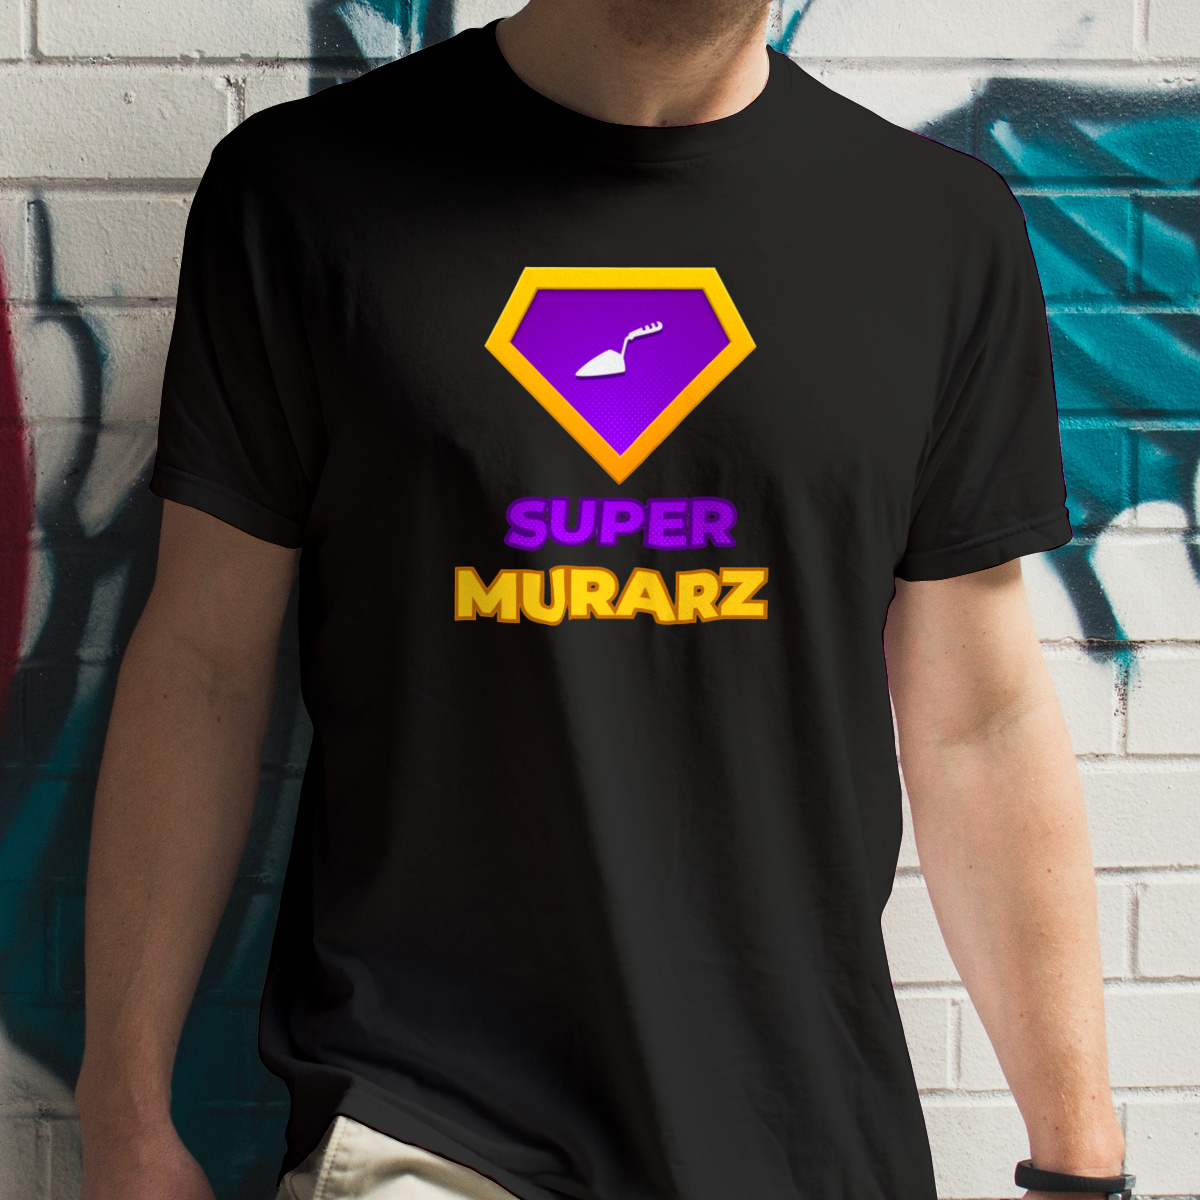 Super Murarz - Męska Koszulka Czarna